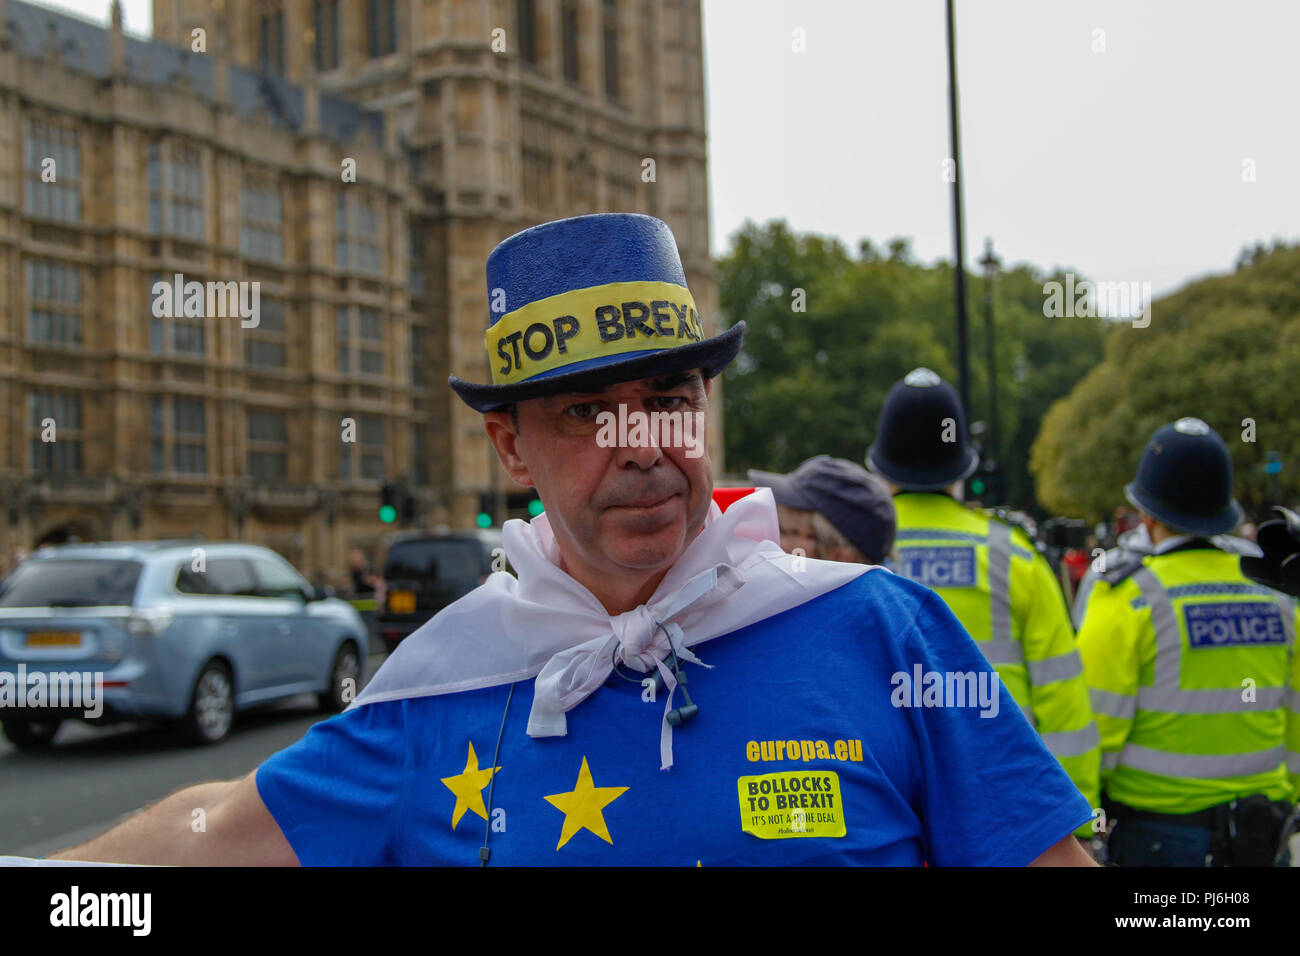 London, UK. 5th Sept 2018. Anti-Brexit Protester outside Parliament Credit: Alex Cavendish/Alamy Live News Stock Photo